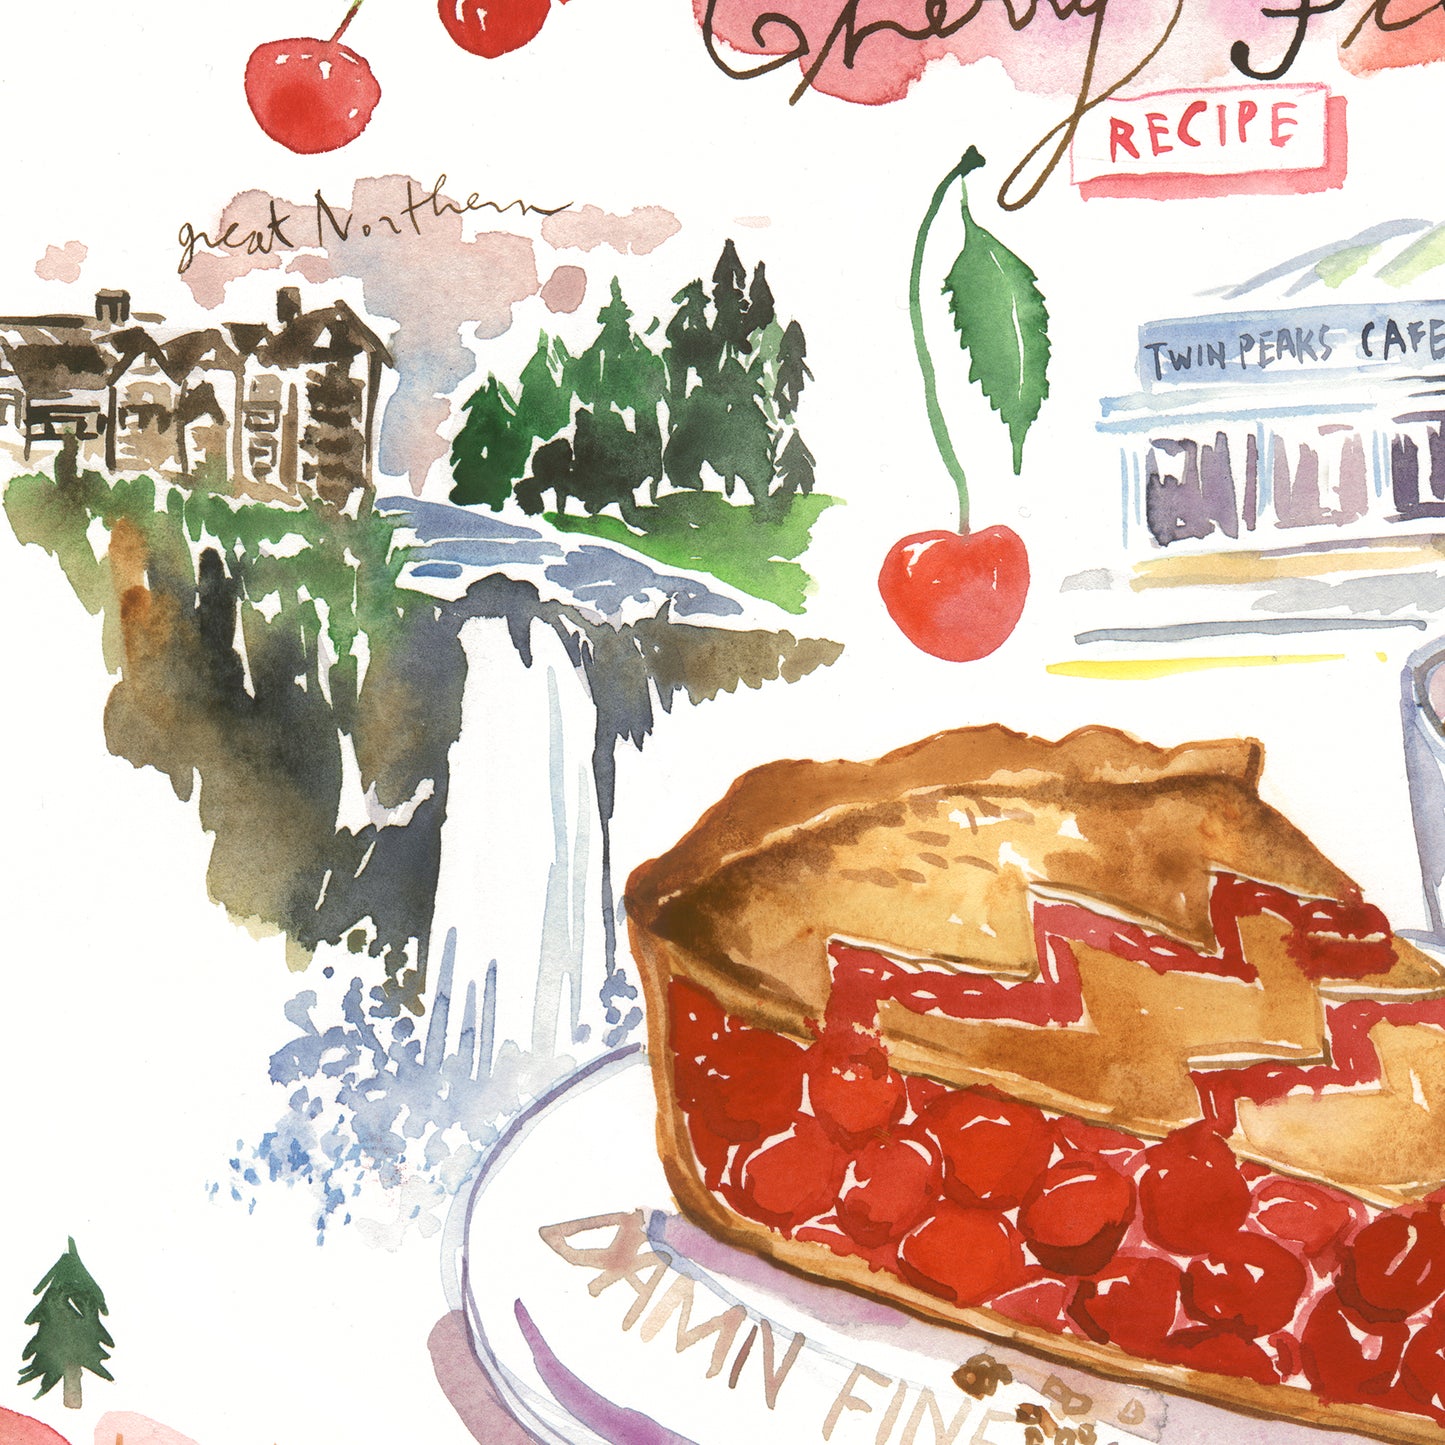 Twin Peaks Cherry Pie recipe